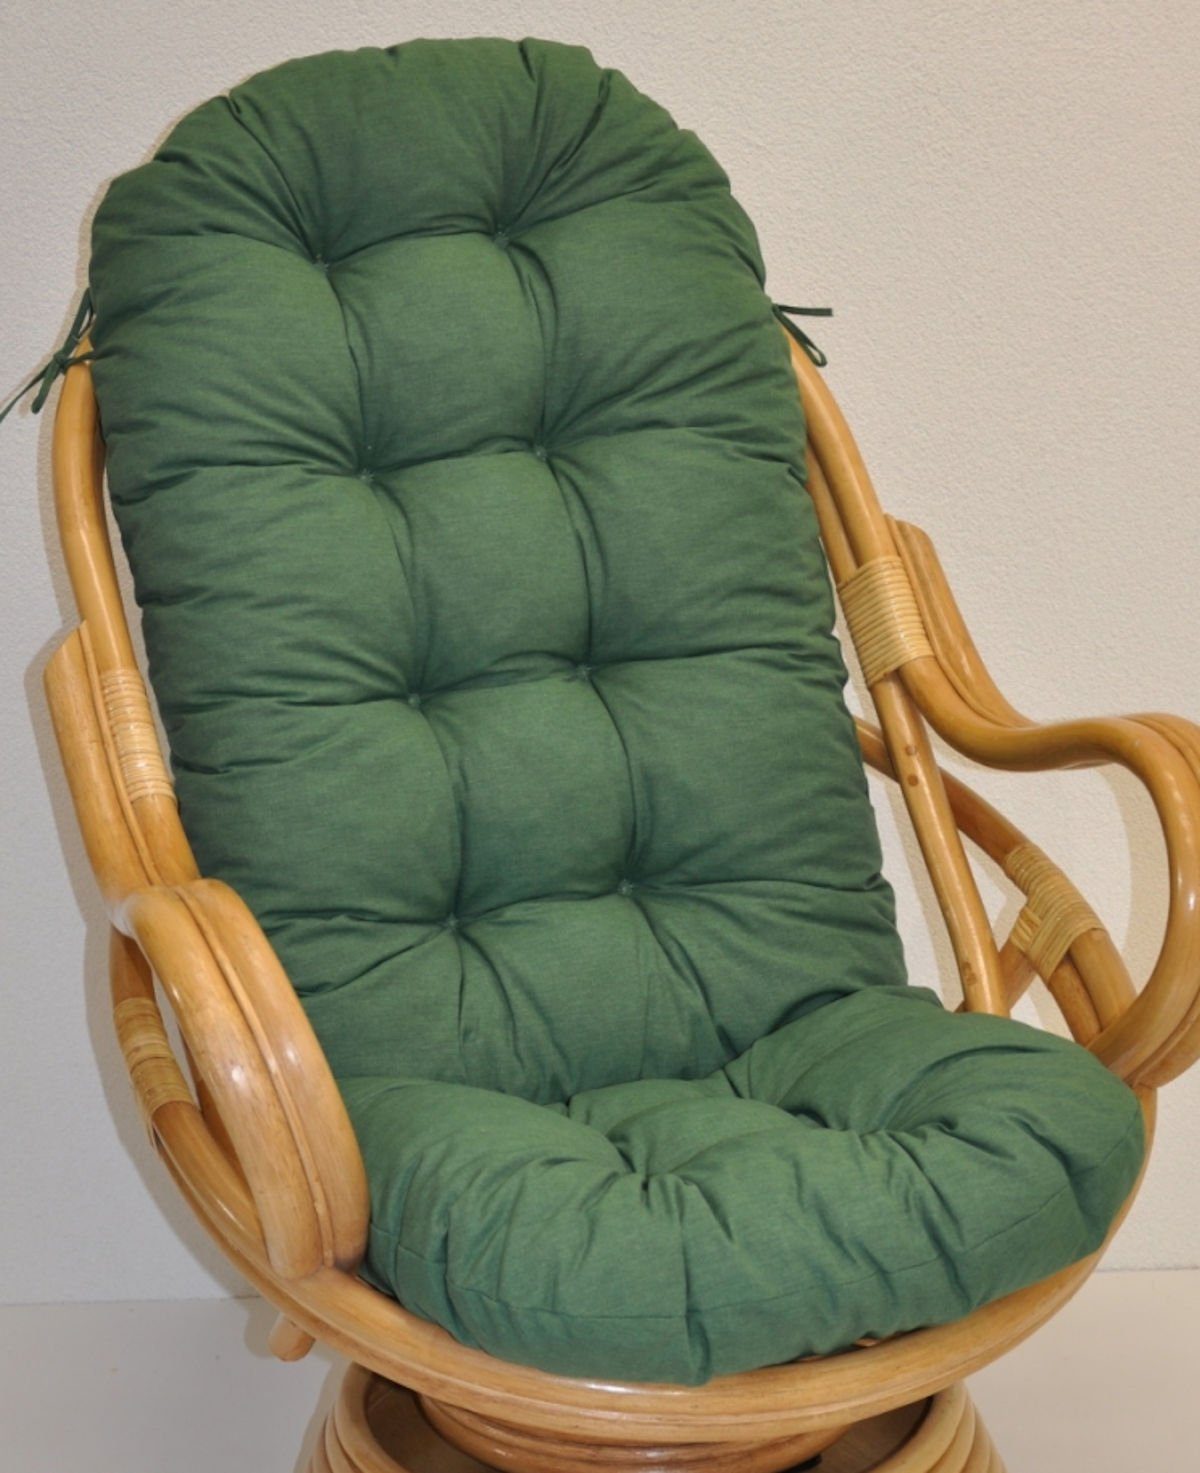 Rattani Sesselauflage 135 L für cm Rattan Drehsessel dunkelgrün Polster Color Schaukelstuhl